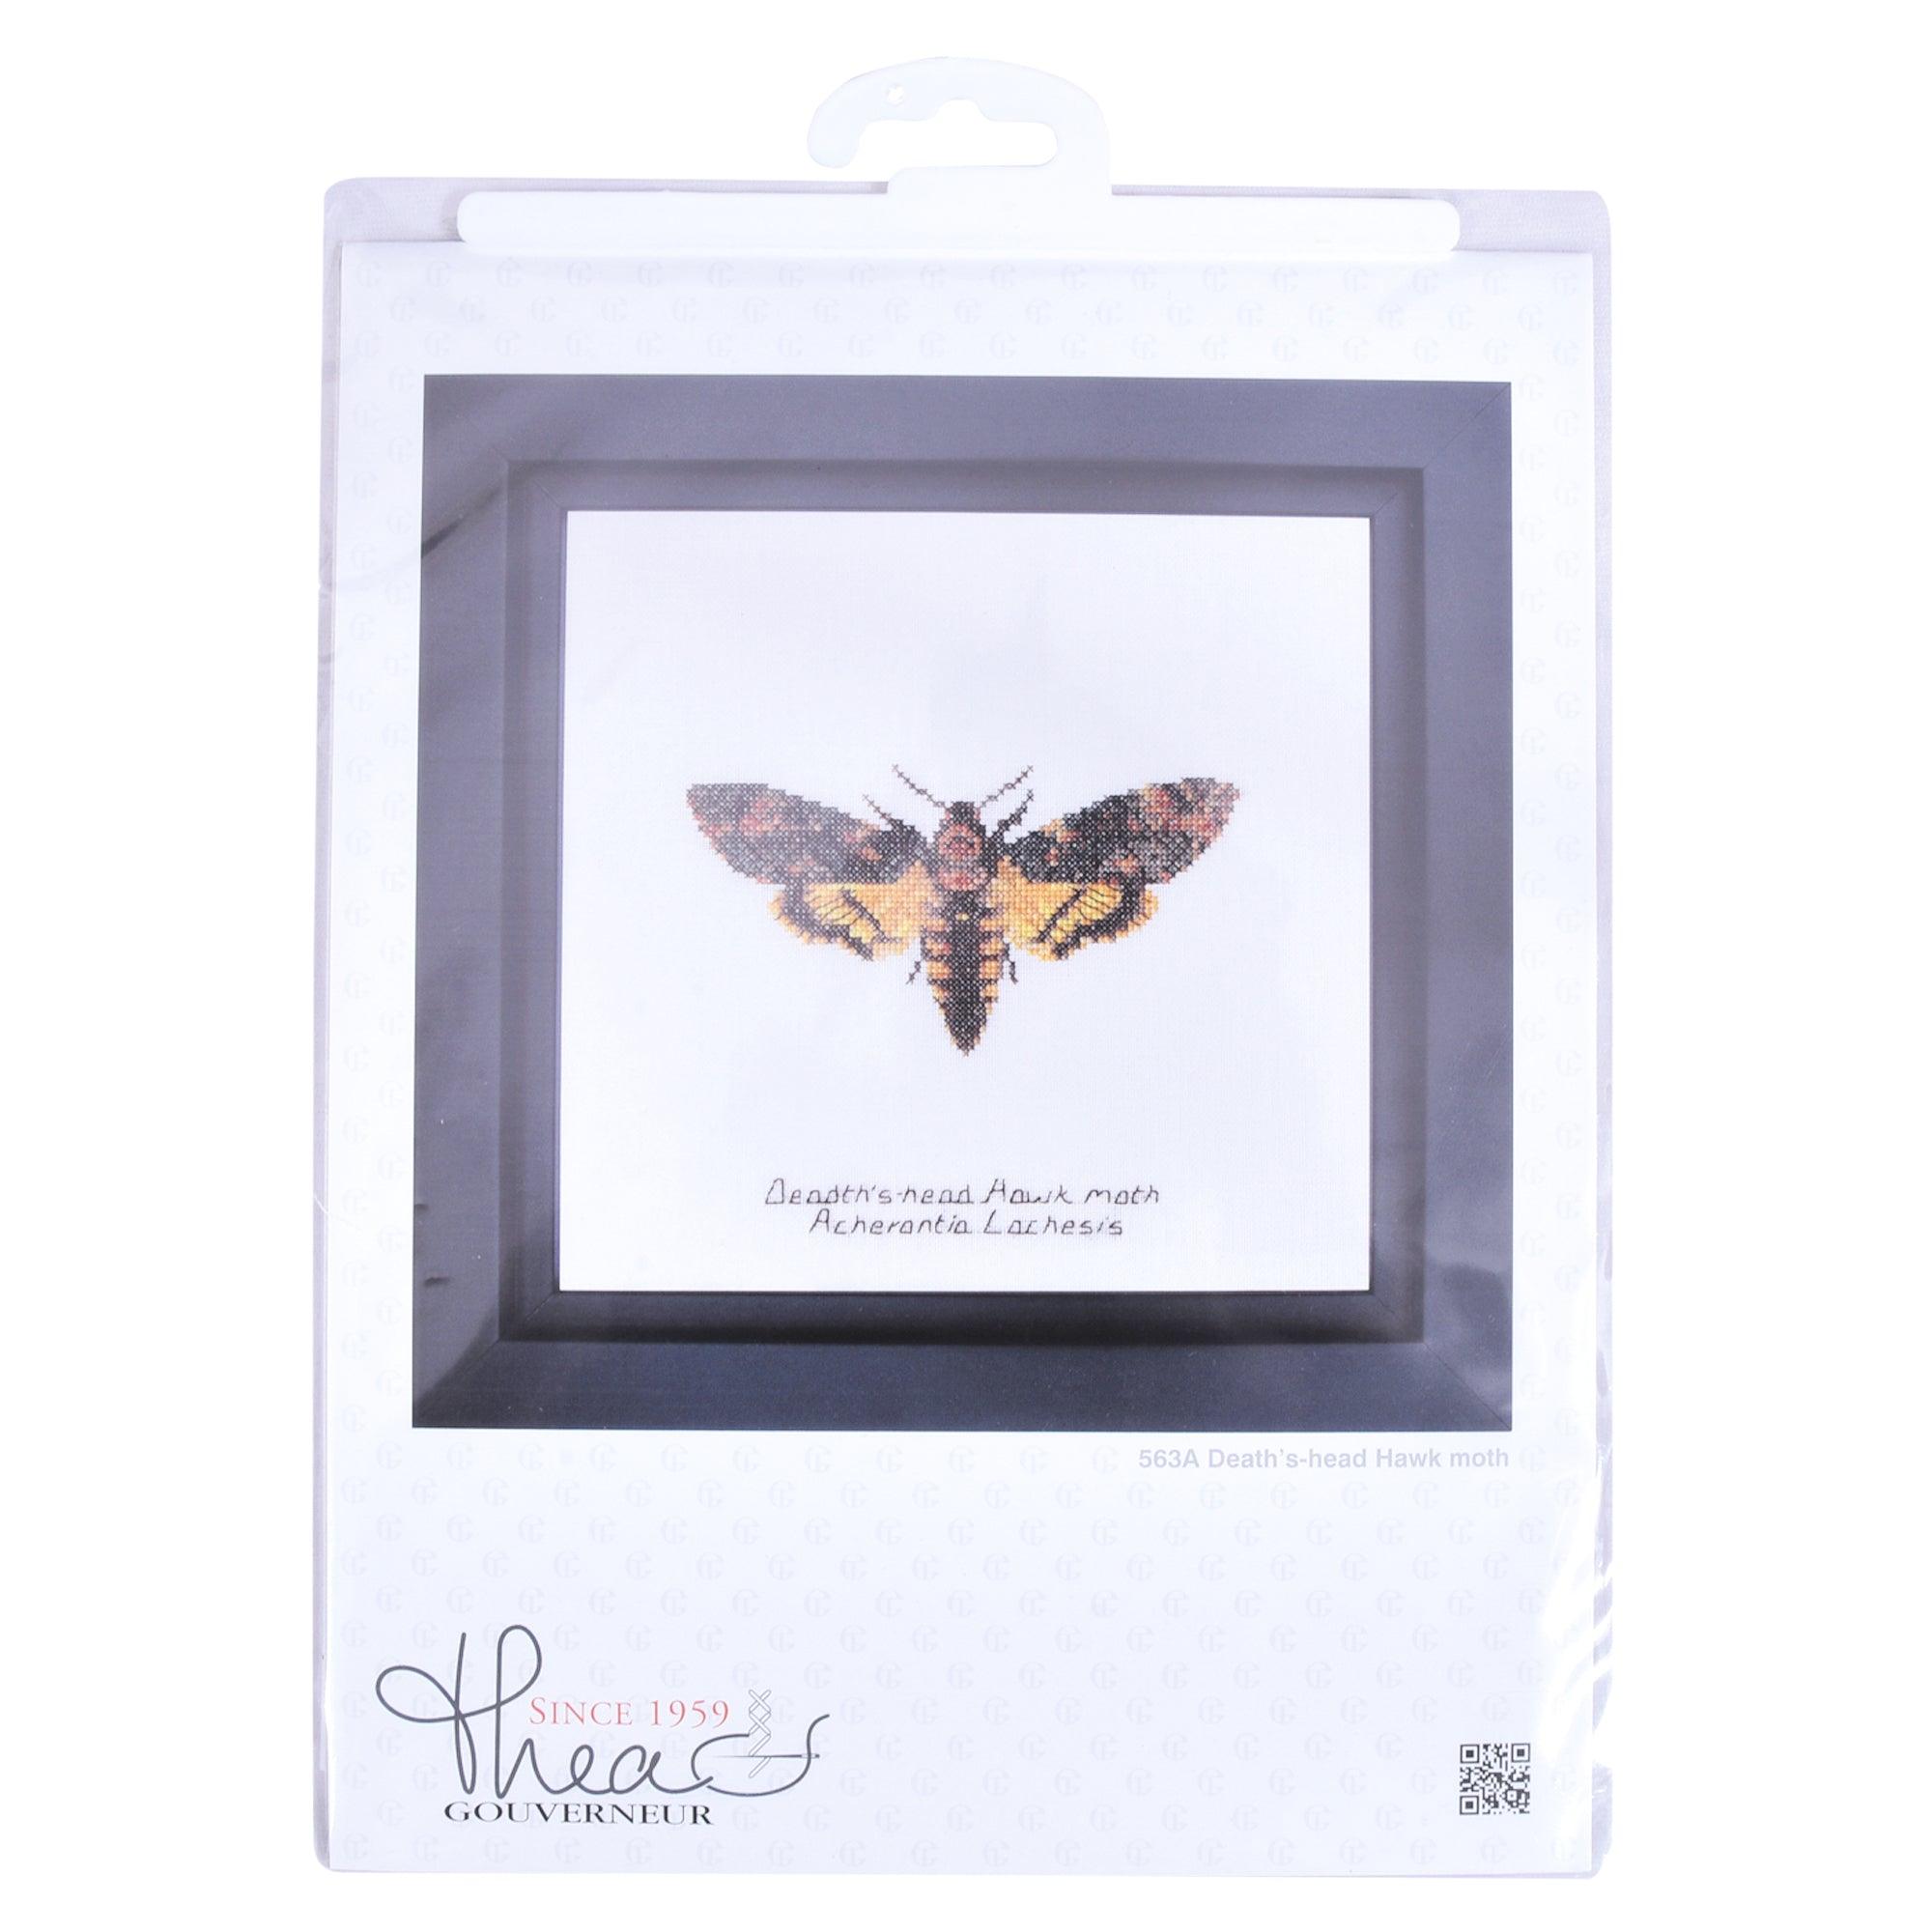 Thea Gouverneur - Counted Cross Stitch Kit - Death's-head Hawk moth - Linen - 32 count - 563 - Thea Gouverneur Since 1959